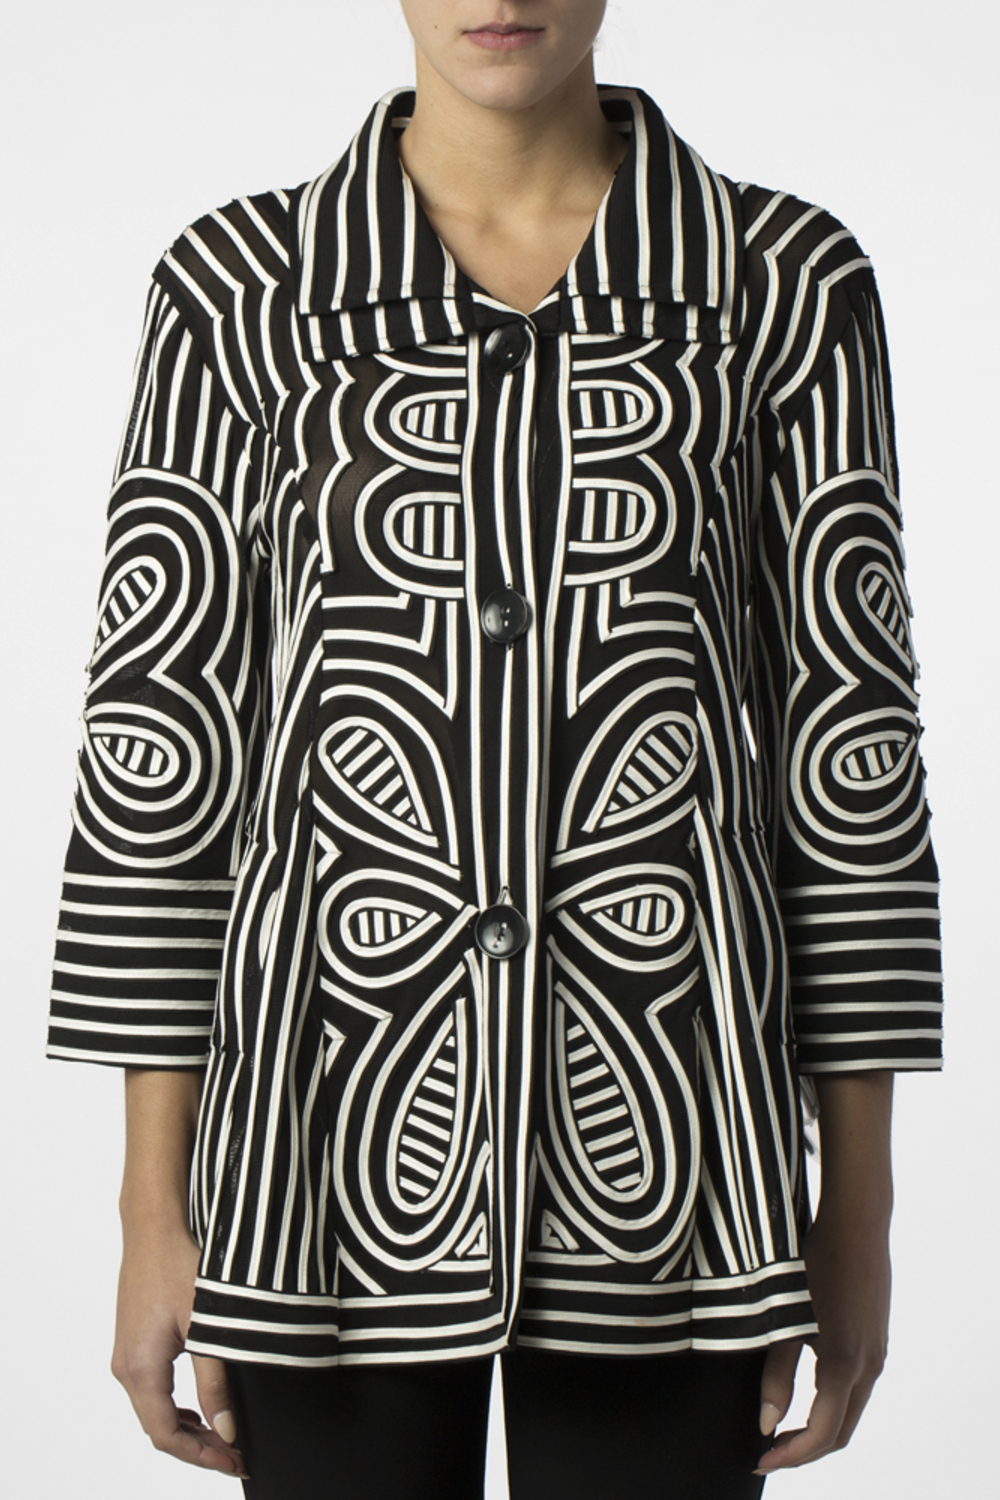 Joseph Ribkoff coat style 152996. Black/white